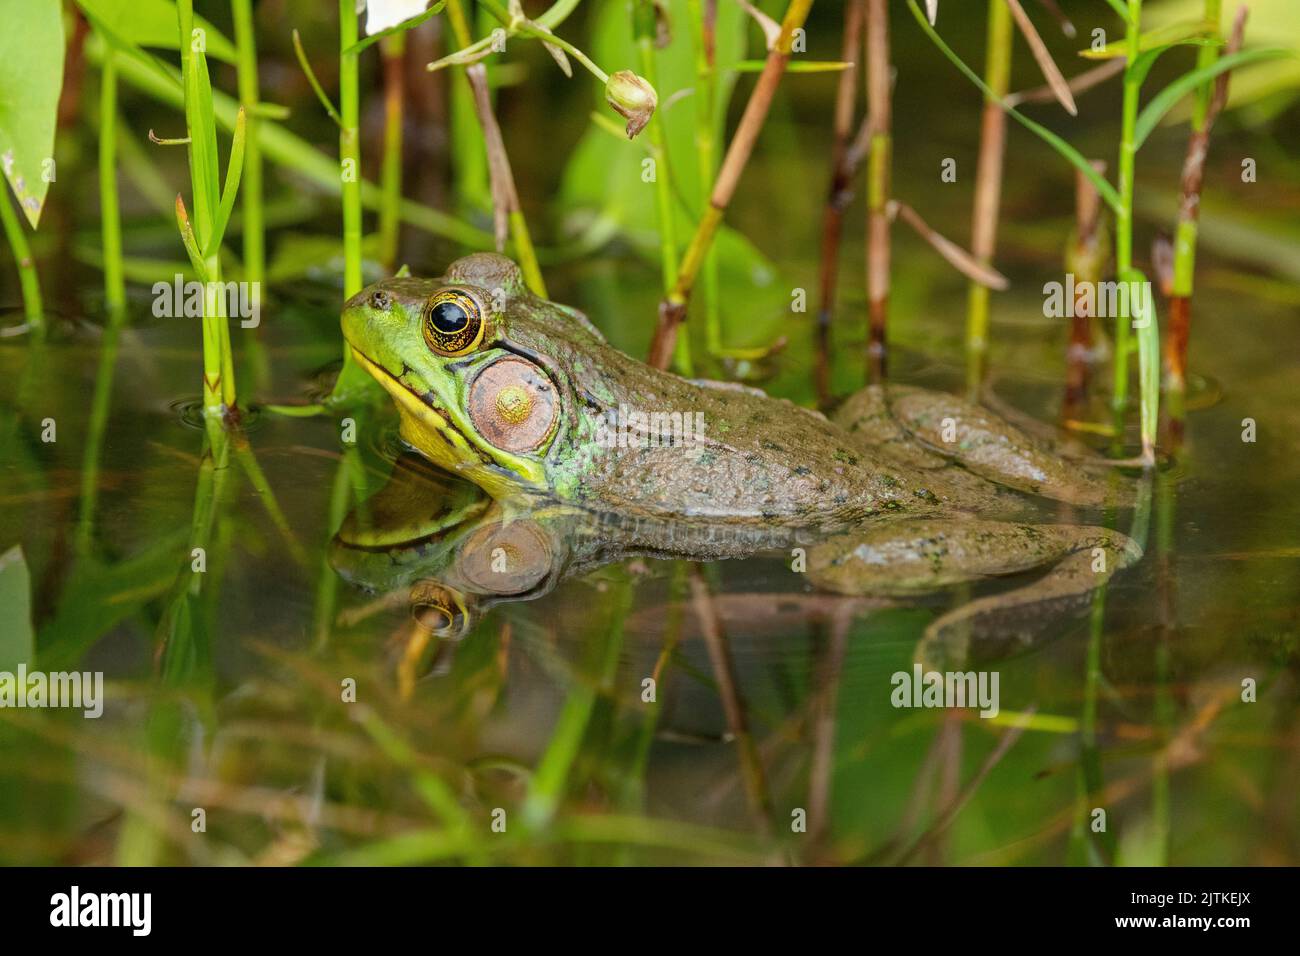 Green frog in backyard pond Stock Photo